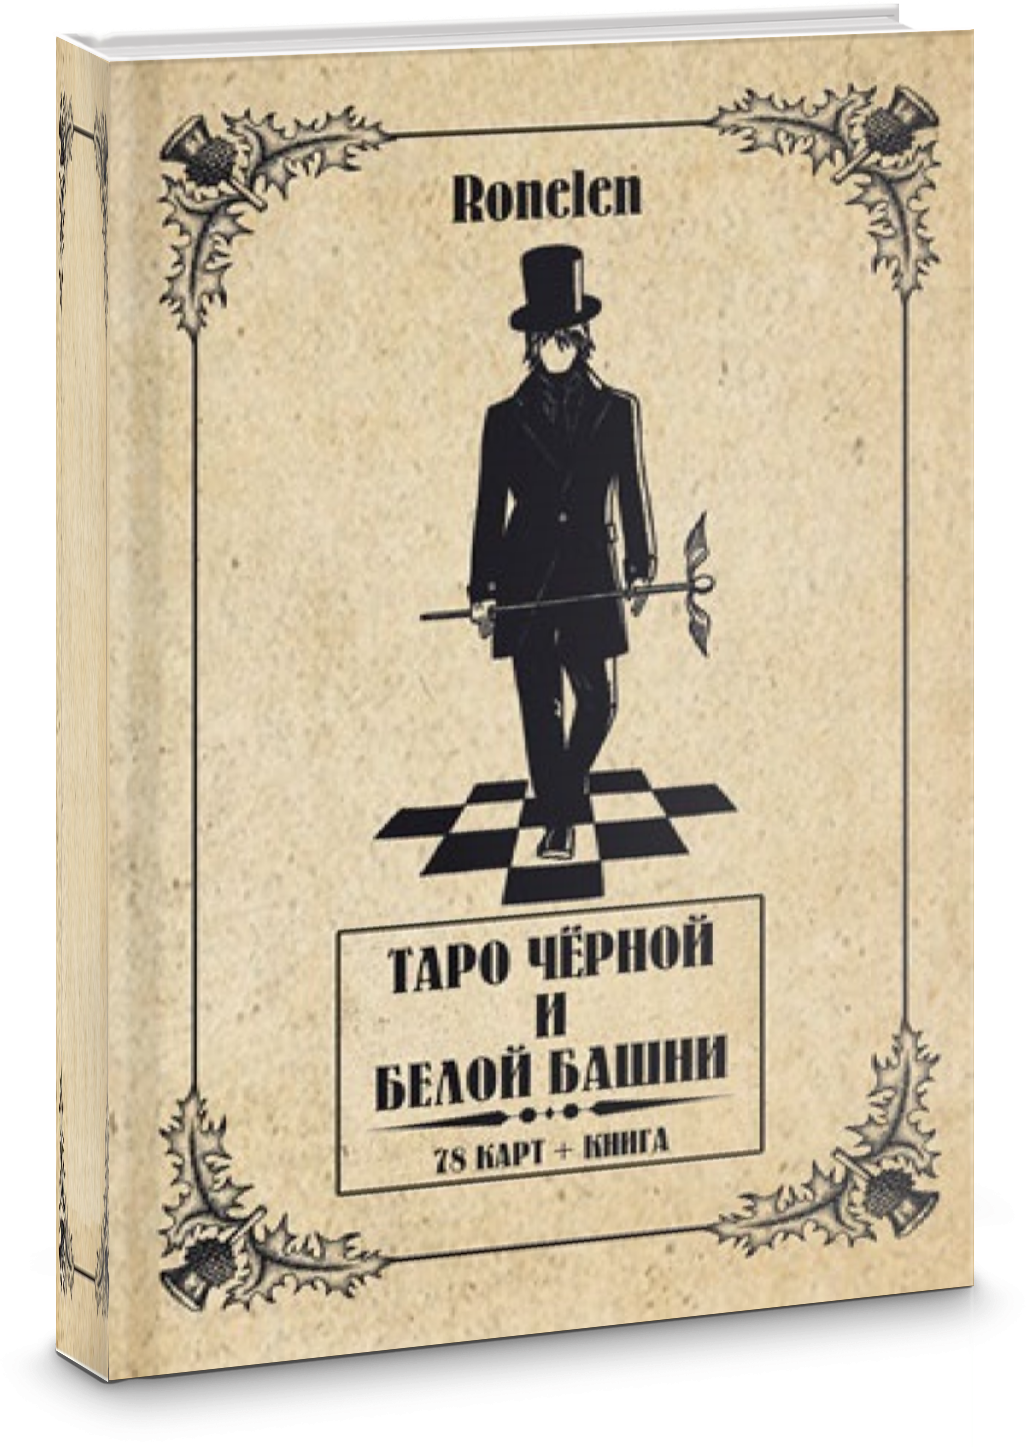 Таро Чёрной и Белой Башни (78 карт + книга) - фото №1